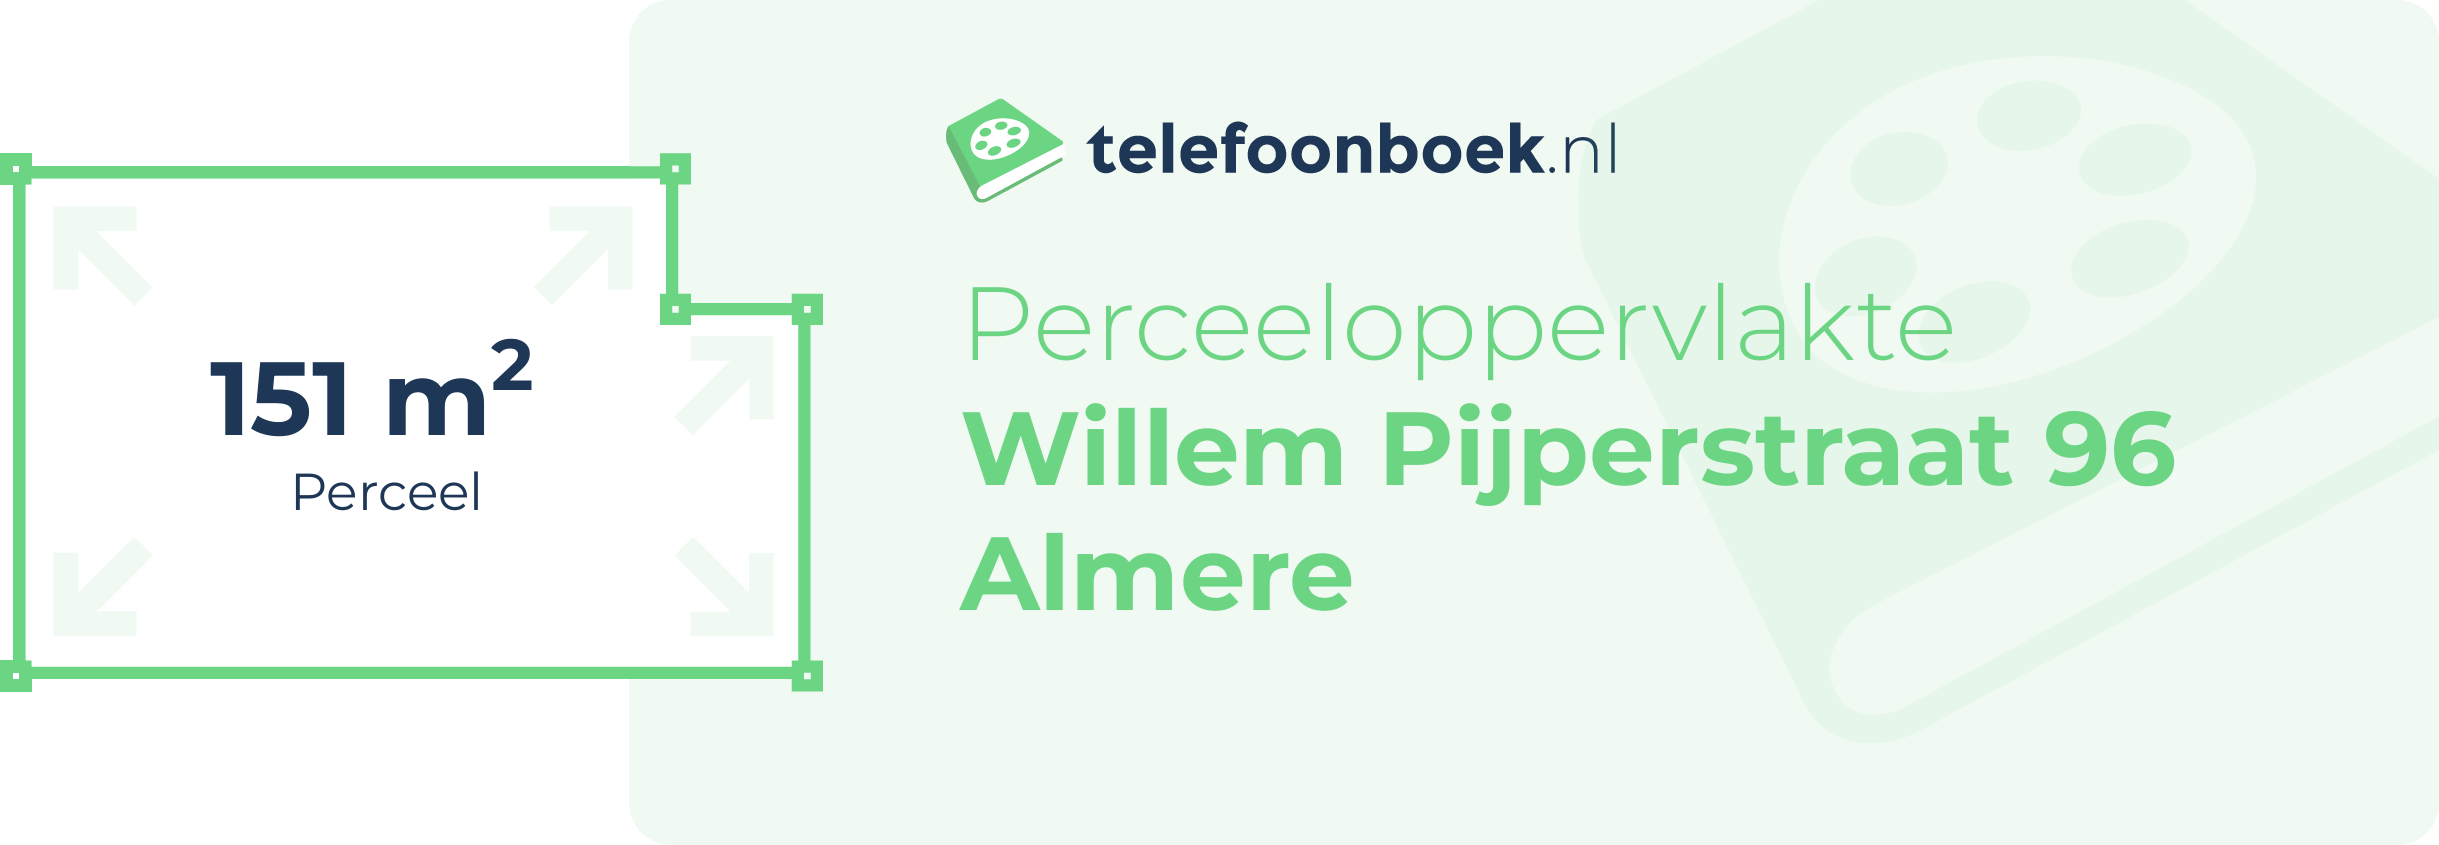 Perceeloppervlakte Willem Pijperstraat 96 Almere